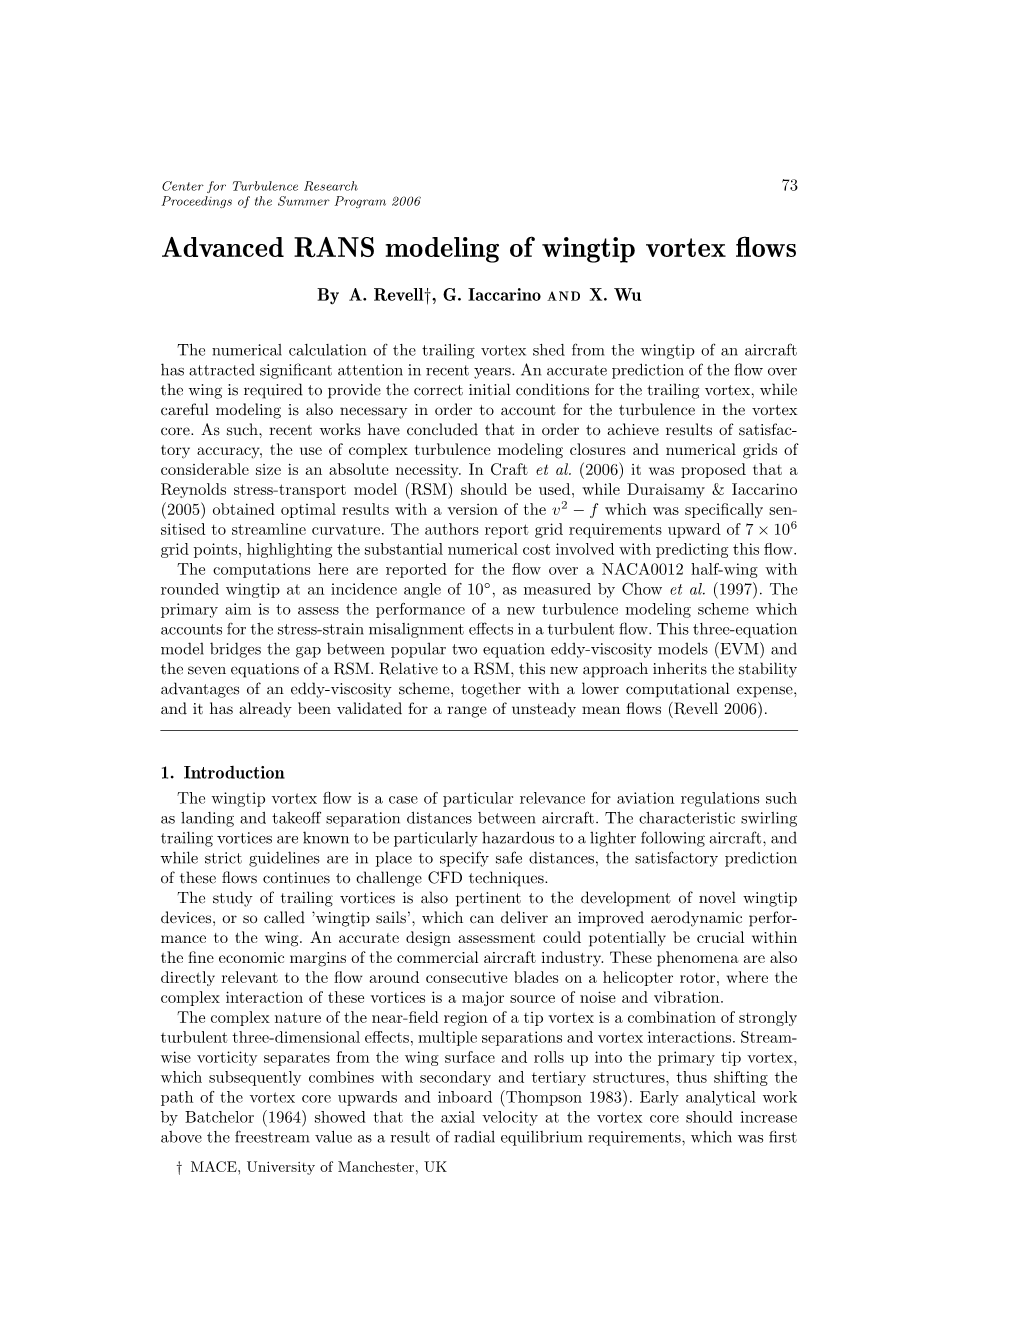 Advanced RANS Modeling of Wingtip Vortex Flows